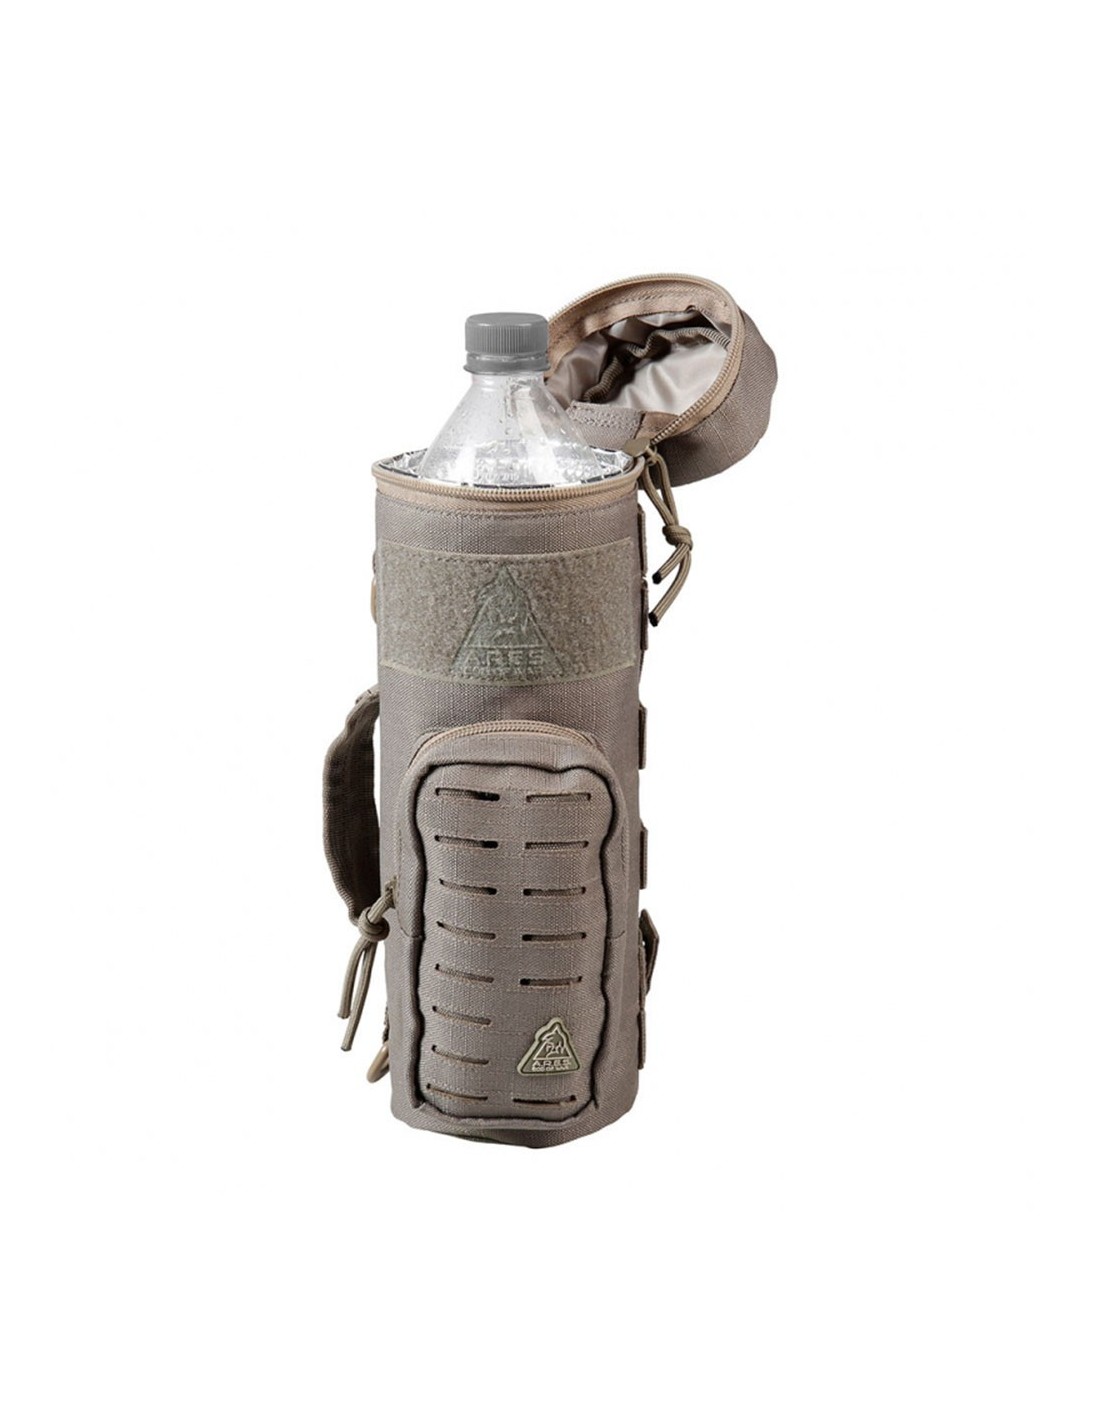 Porte bouteille isotherme - Equipement militaire